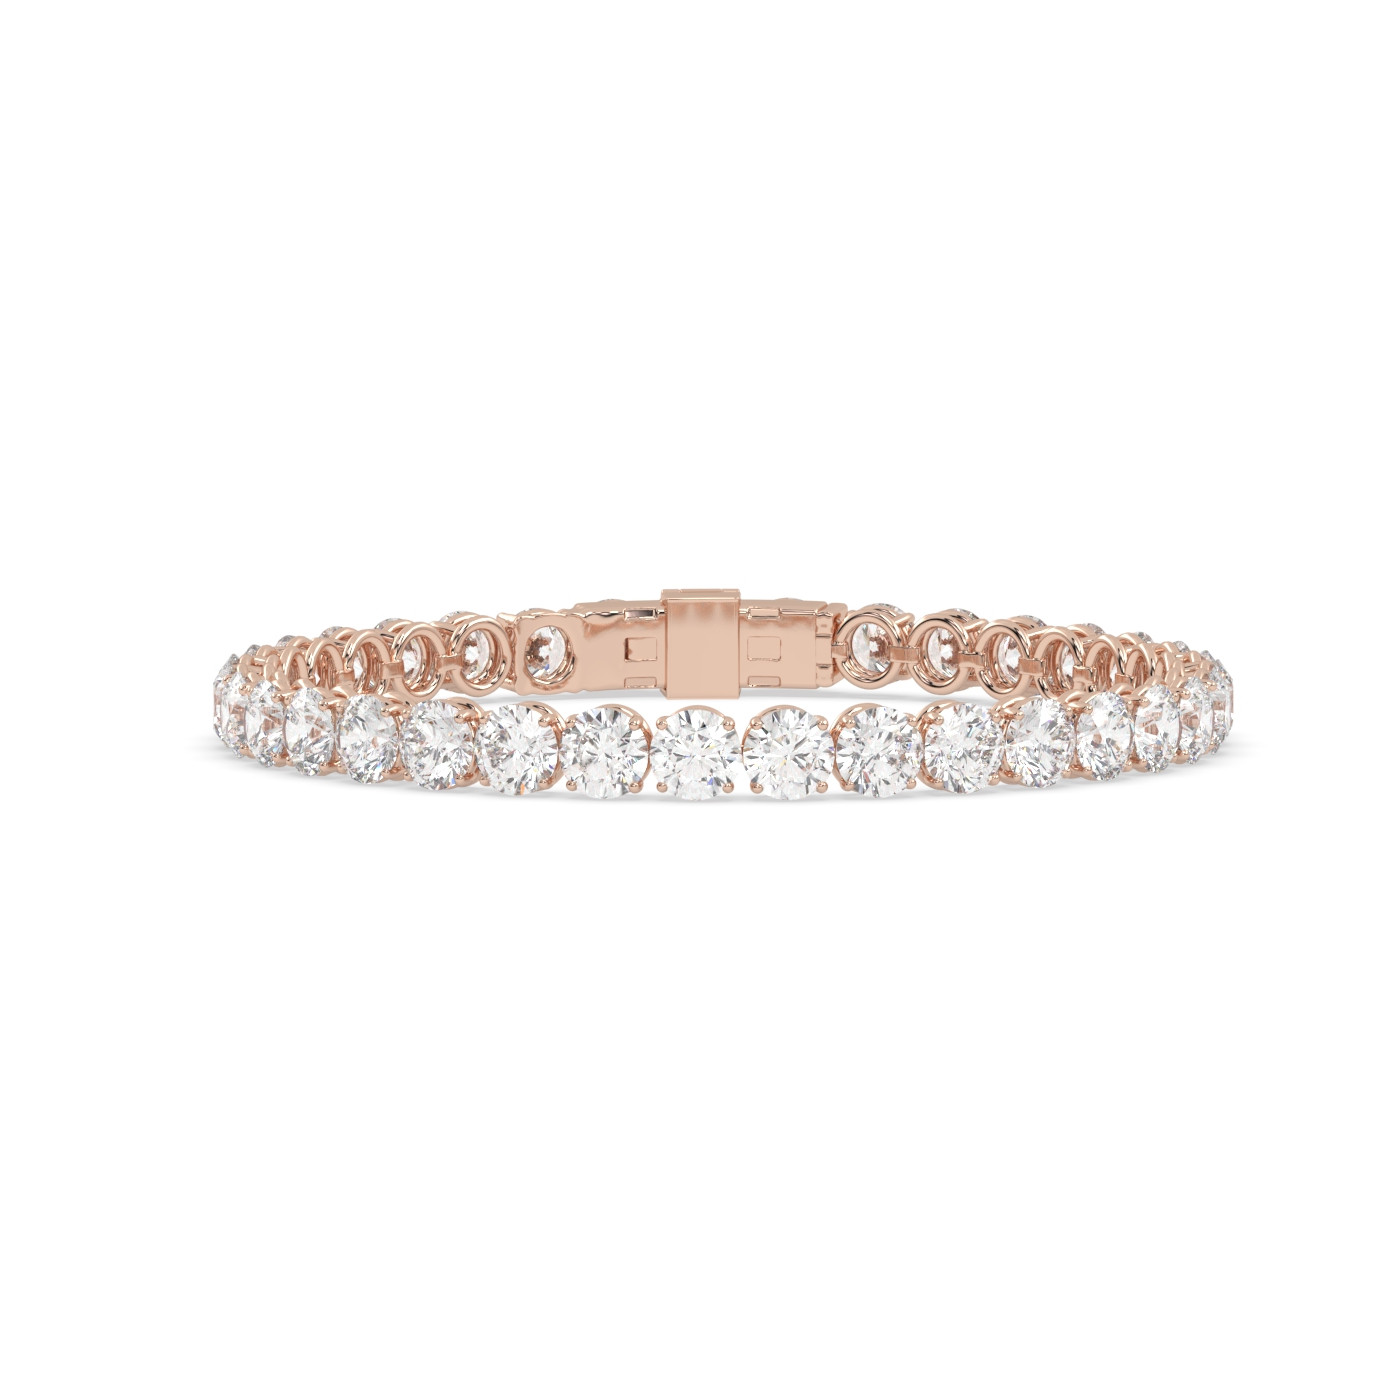 18k rose gold  7.0 carat round diamond tennis bracelet with modern american lock system Photos & images